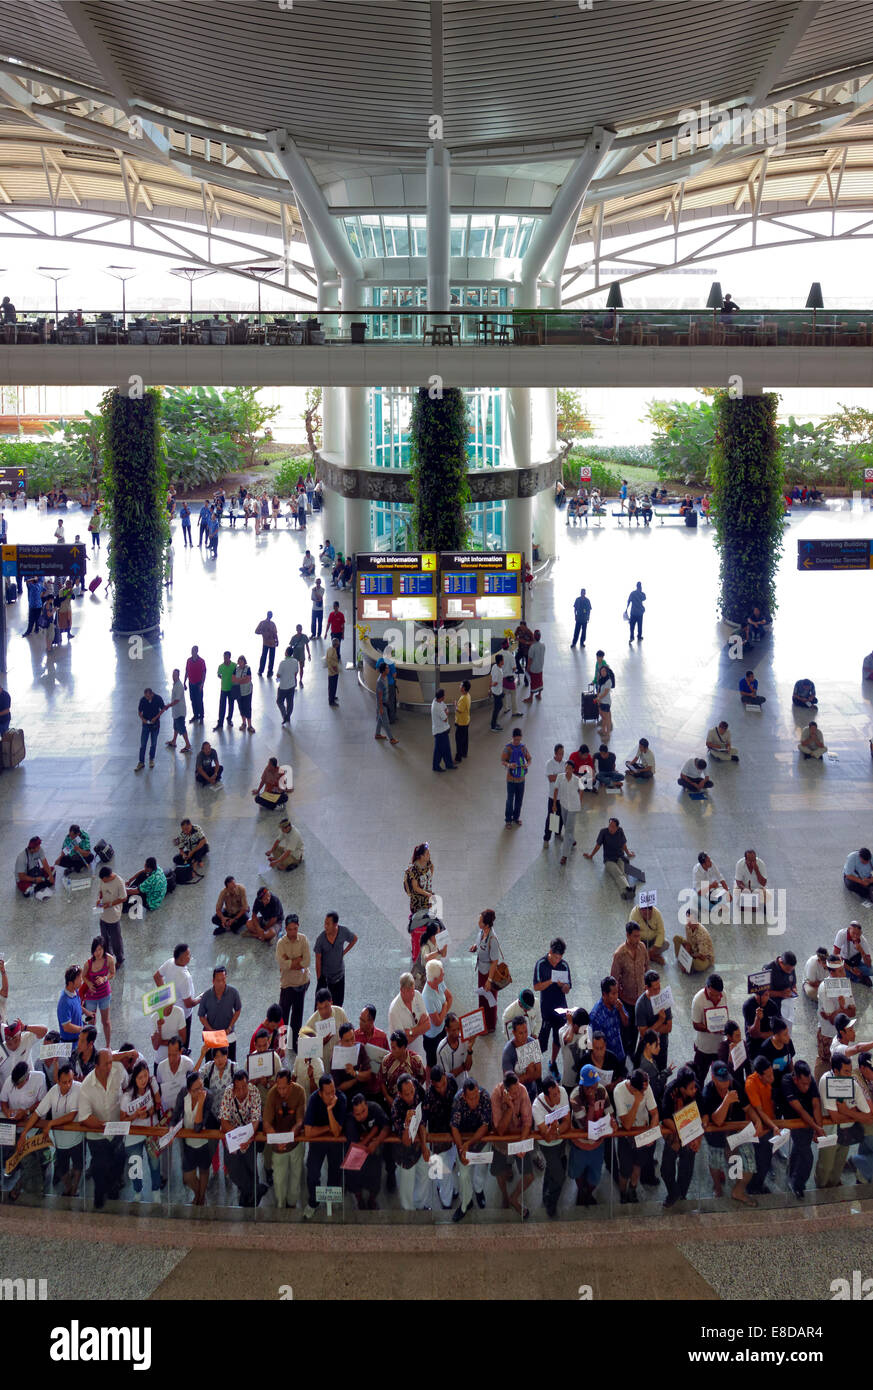 Concourse, arrival with waiting greeters, Ngurah Rai Airport or Denpasar International Airport, Tuban, Bali, Indonesia Stock Photo